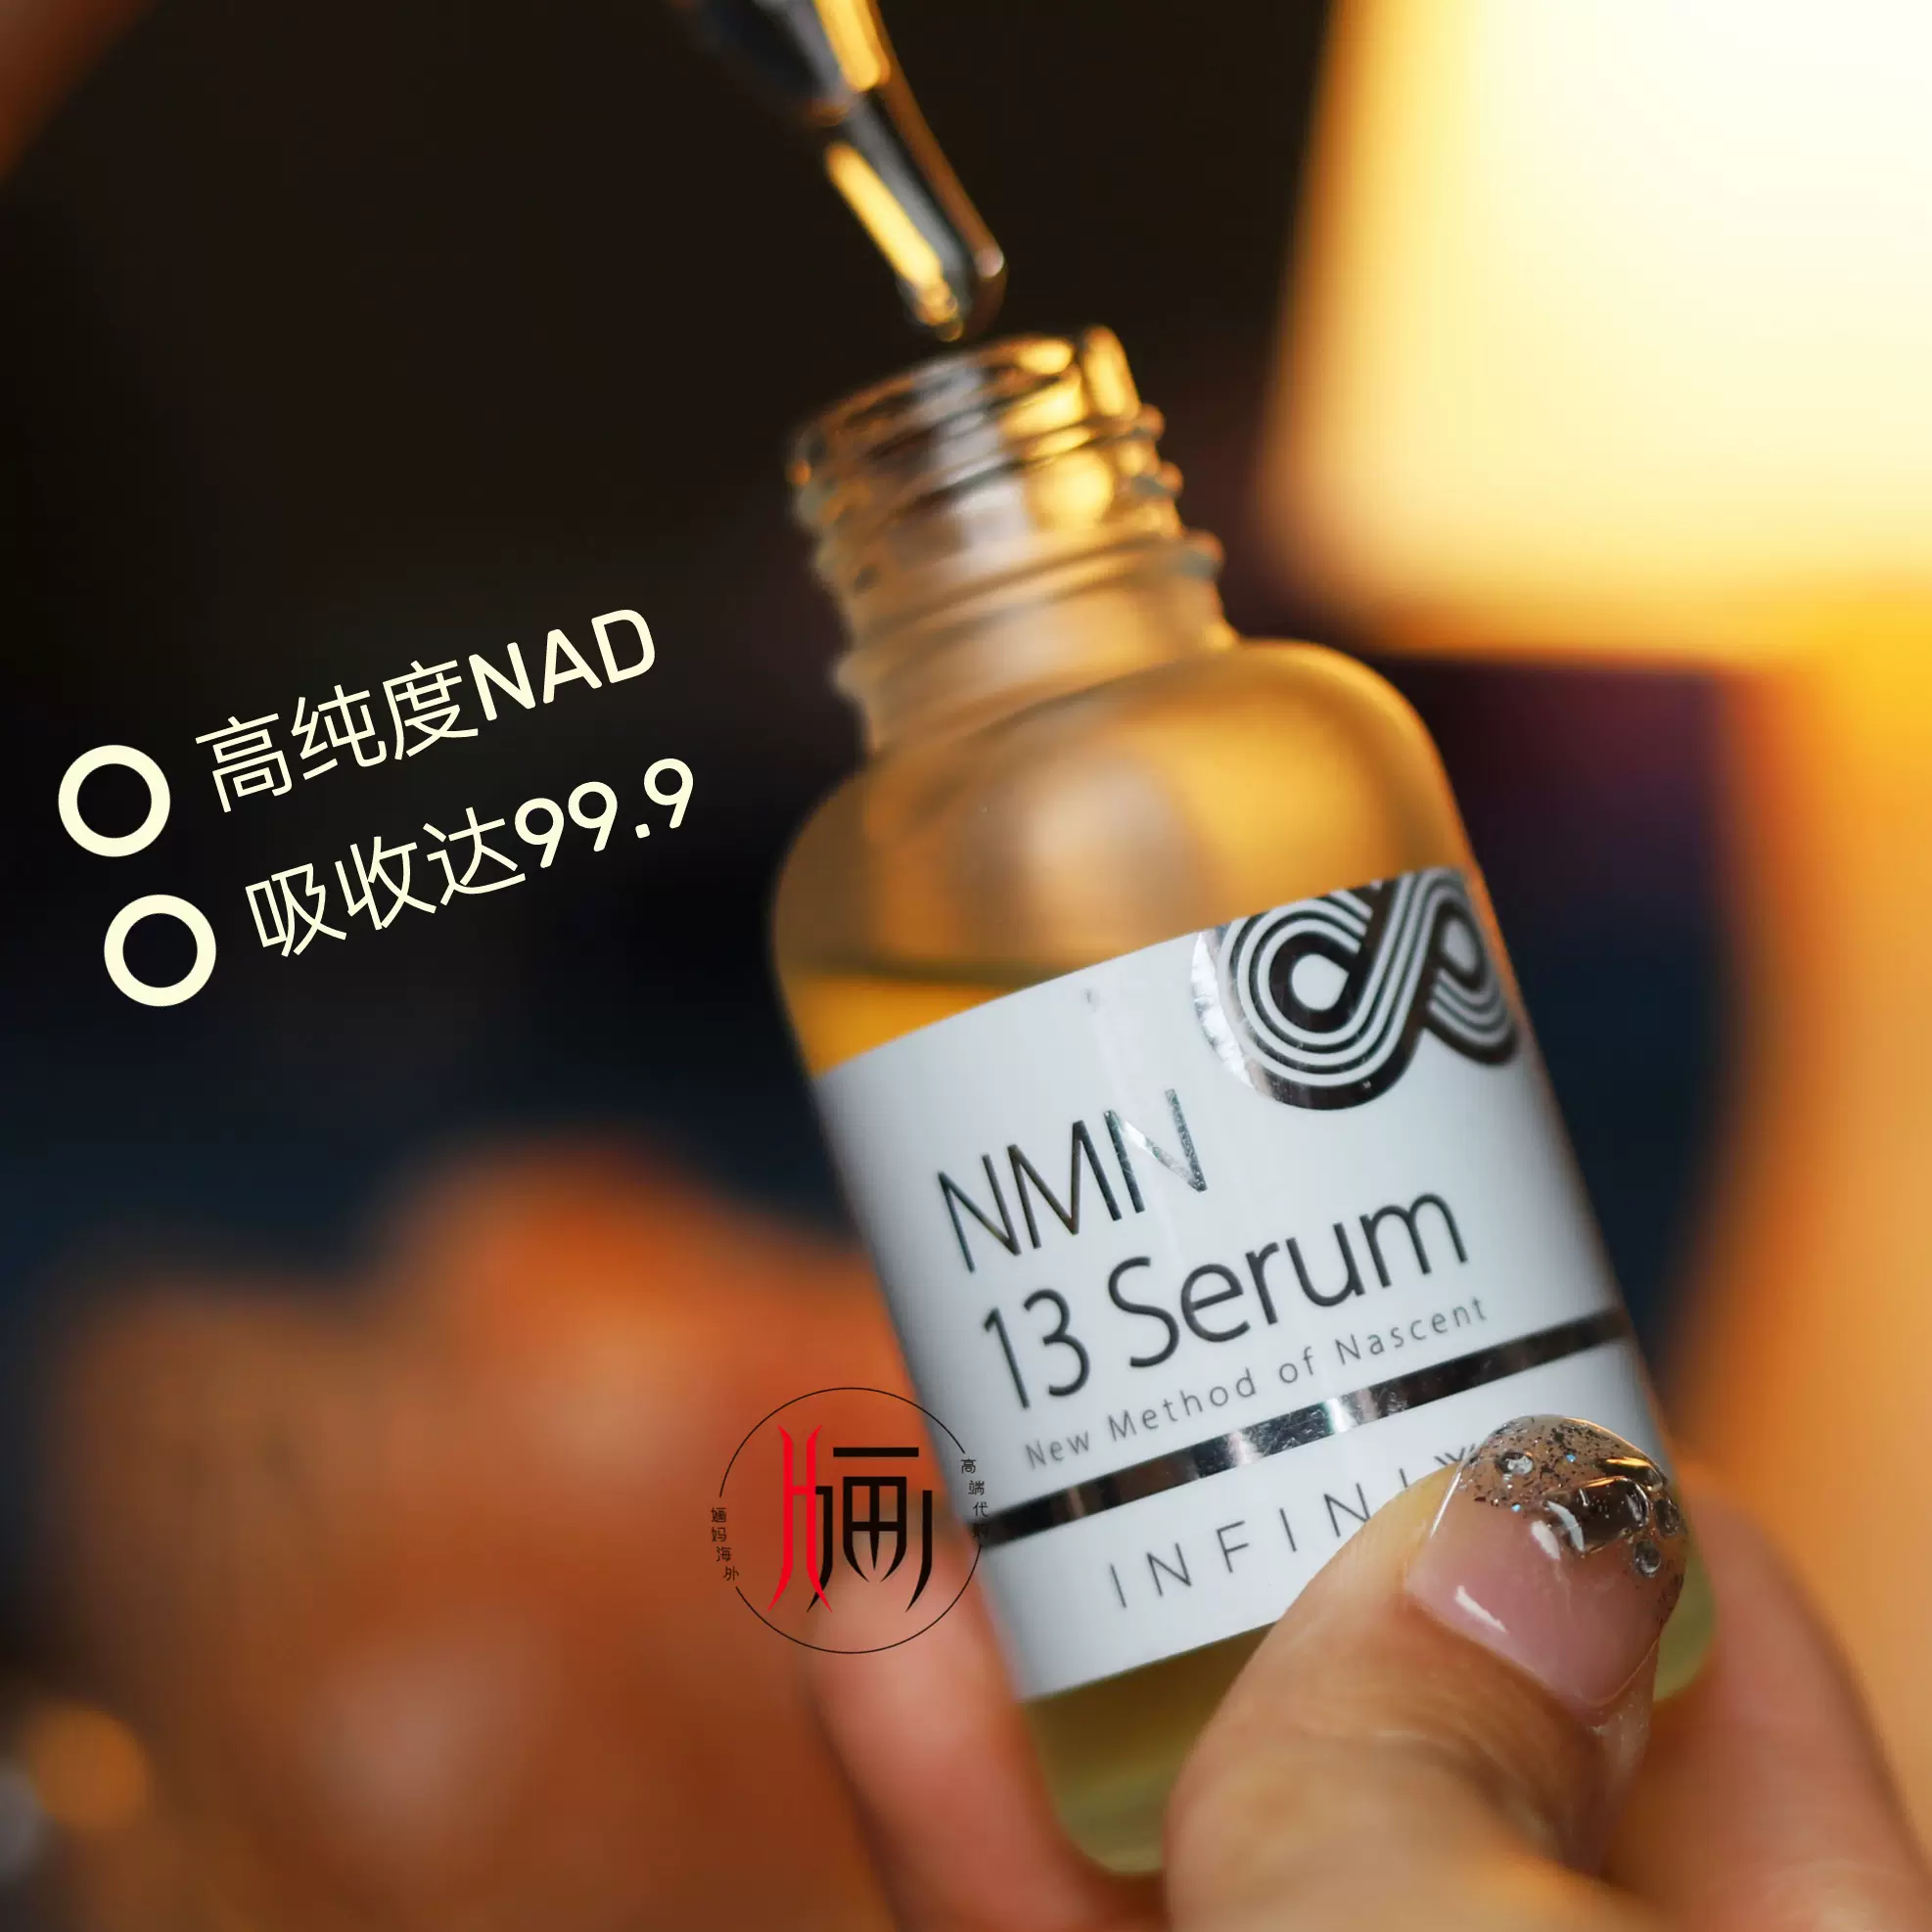 NMN 13 Serum forPro 30ml フォープロ - 美容液